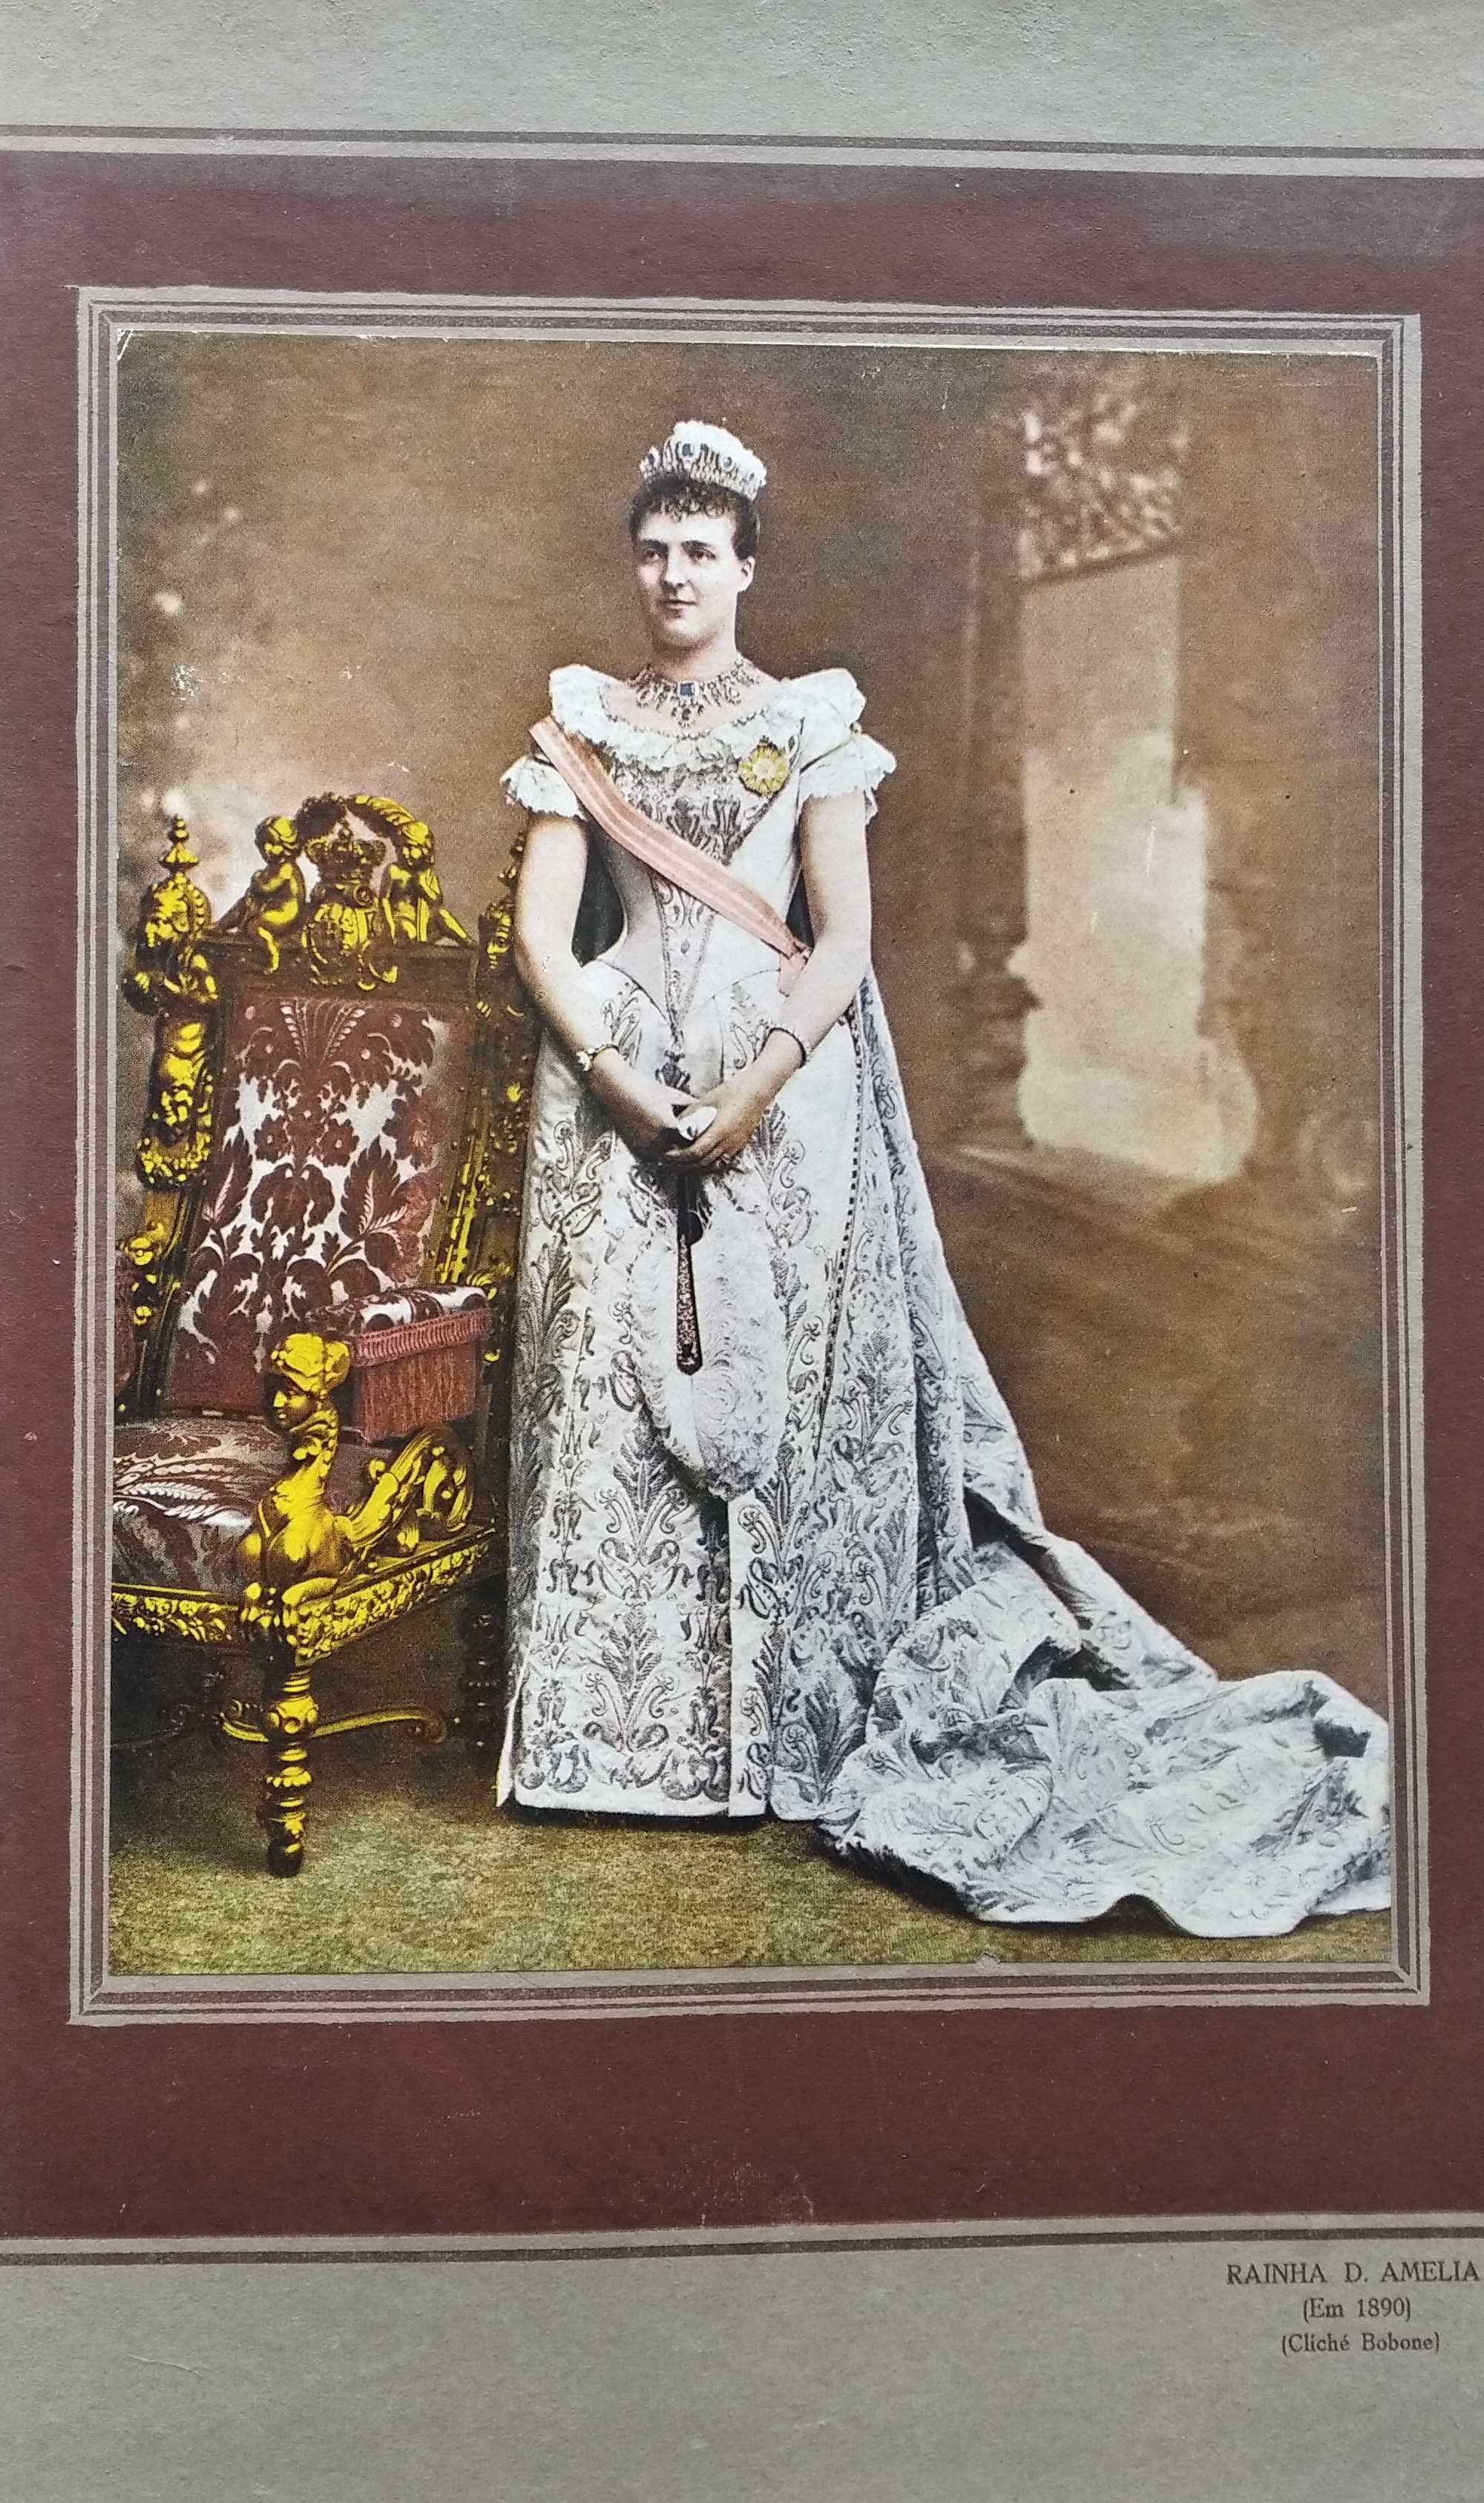 Fotografia Cliche Bobone; Rainha D. Amelia Manuel De Arriaga George VI